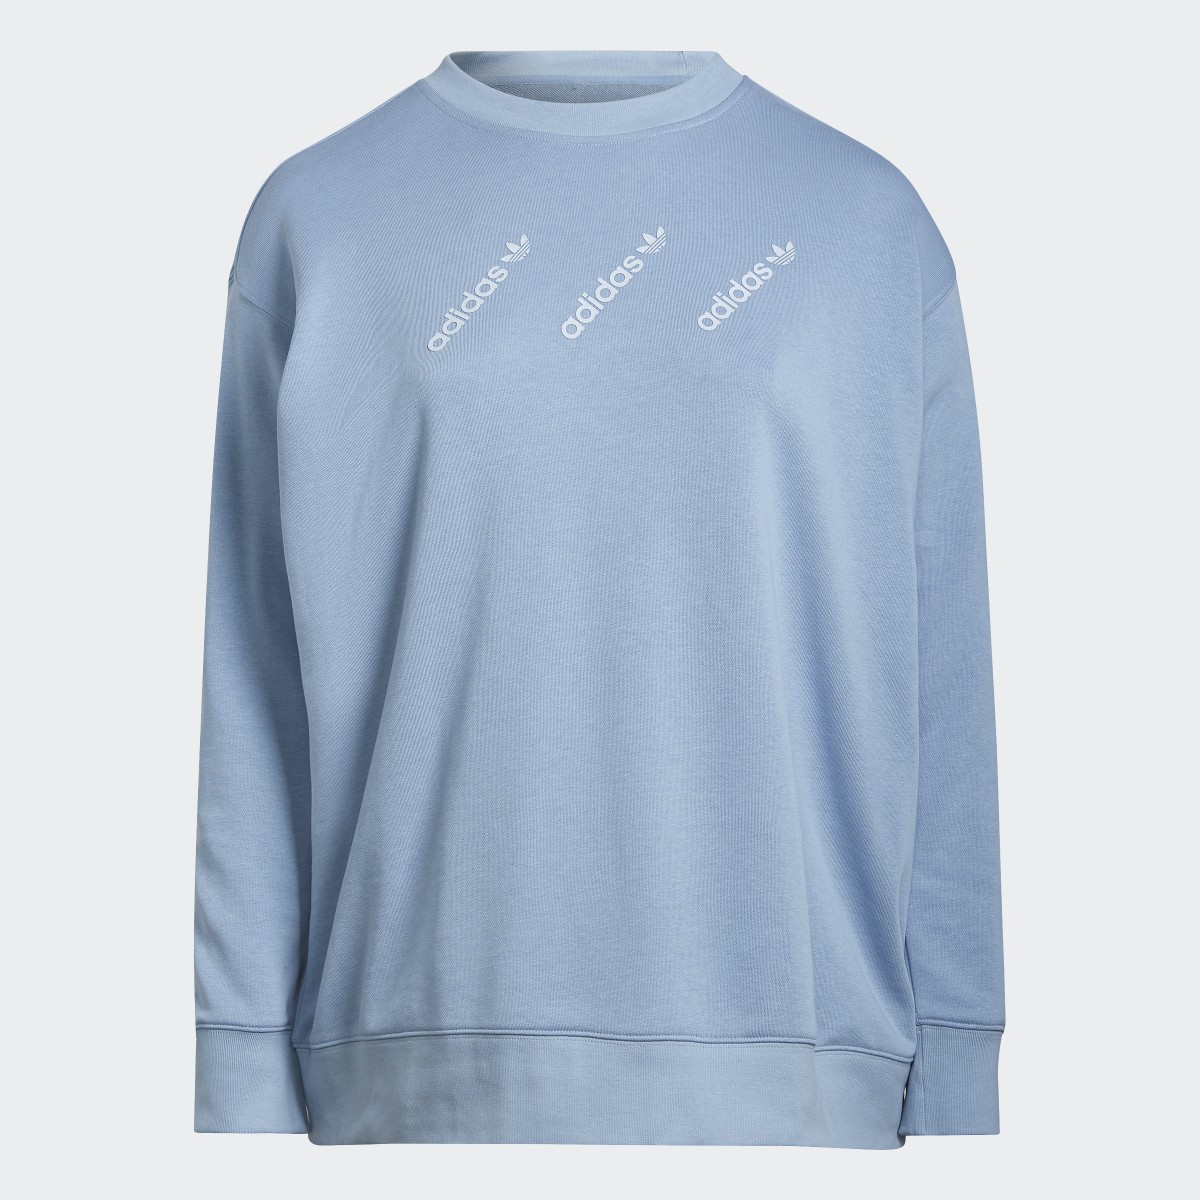 Adidas Crew Sweatshirt (Plus Size). 6